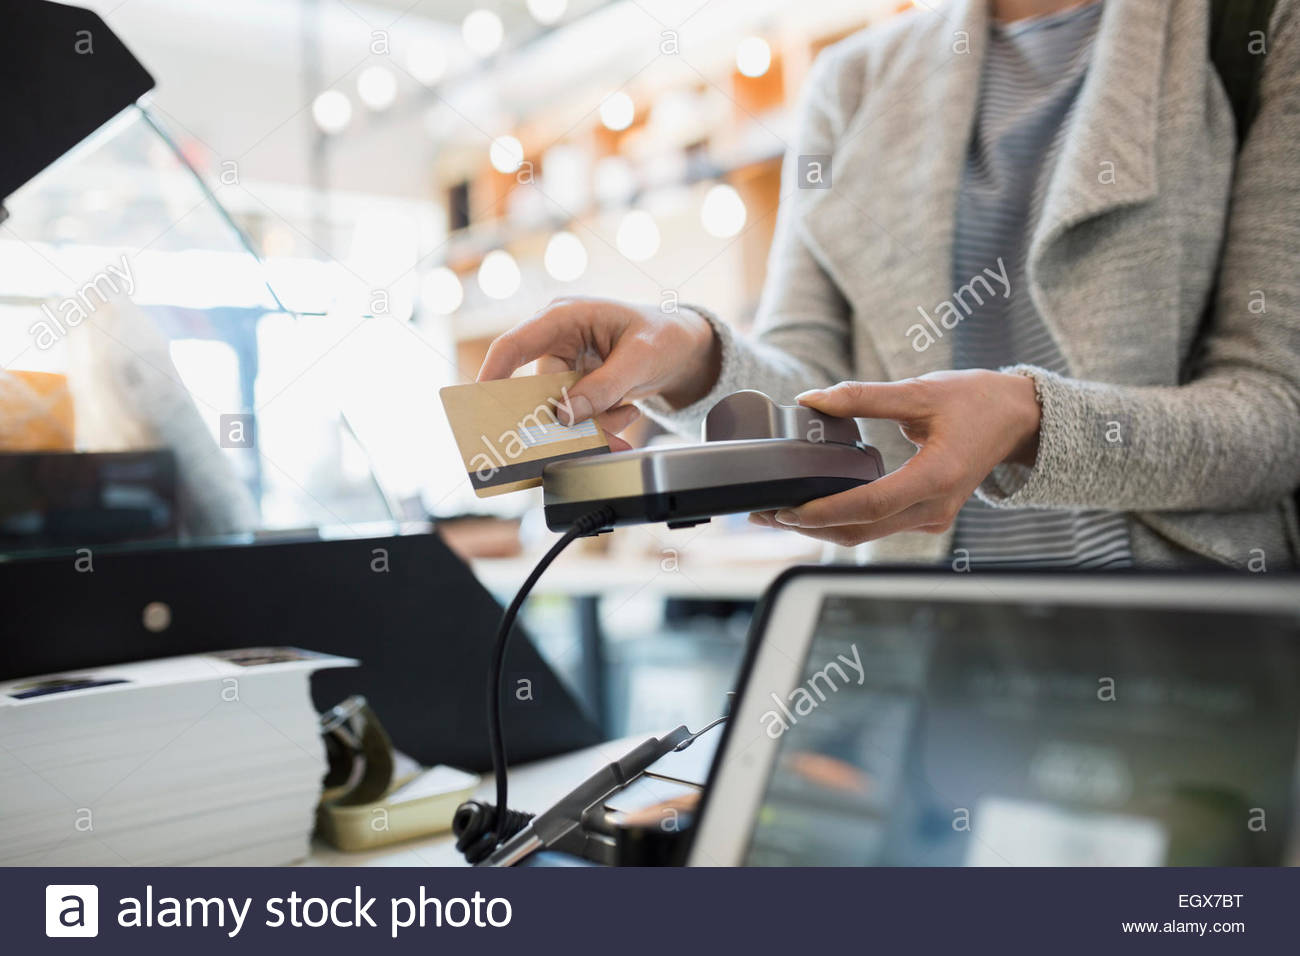 Customer paying at credit card reader in market Stock Photo